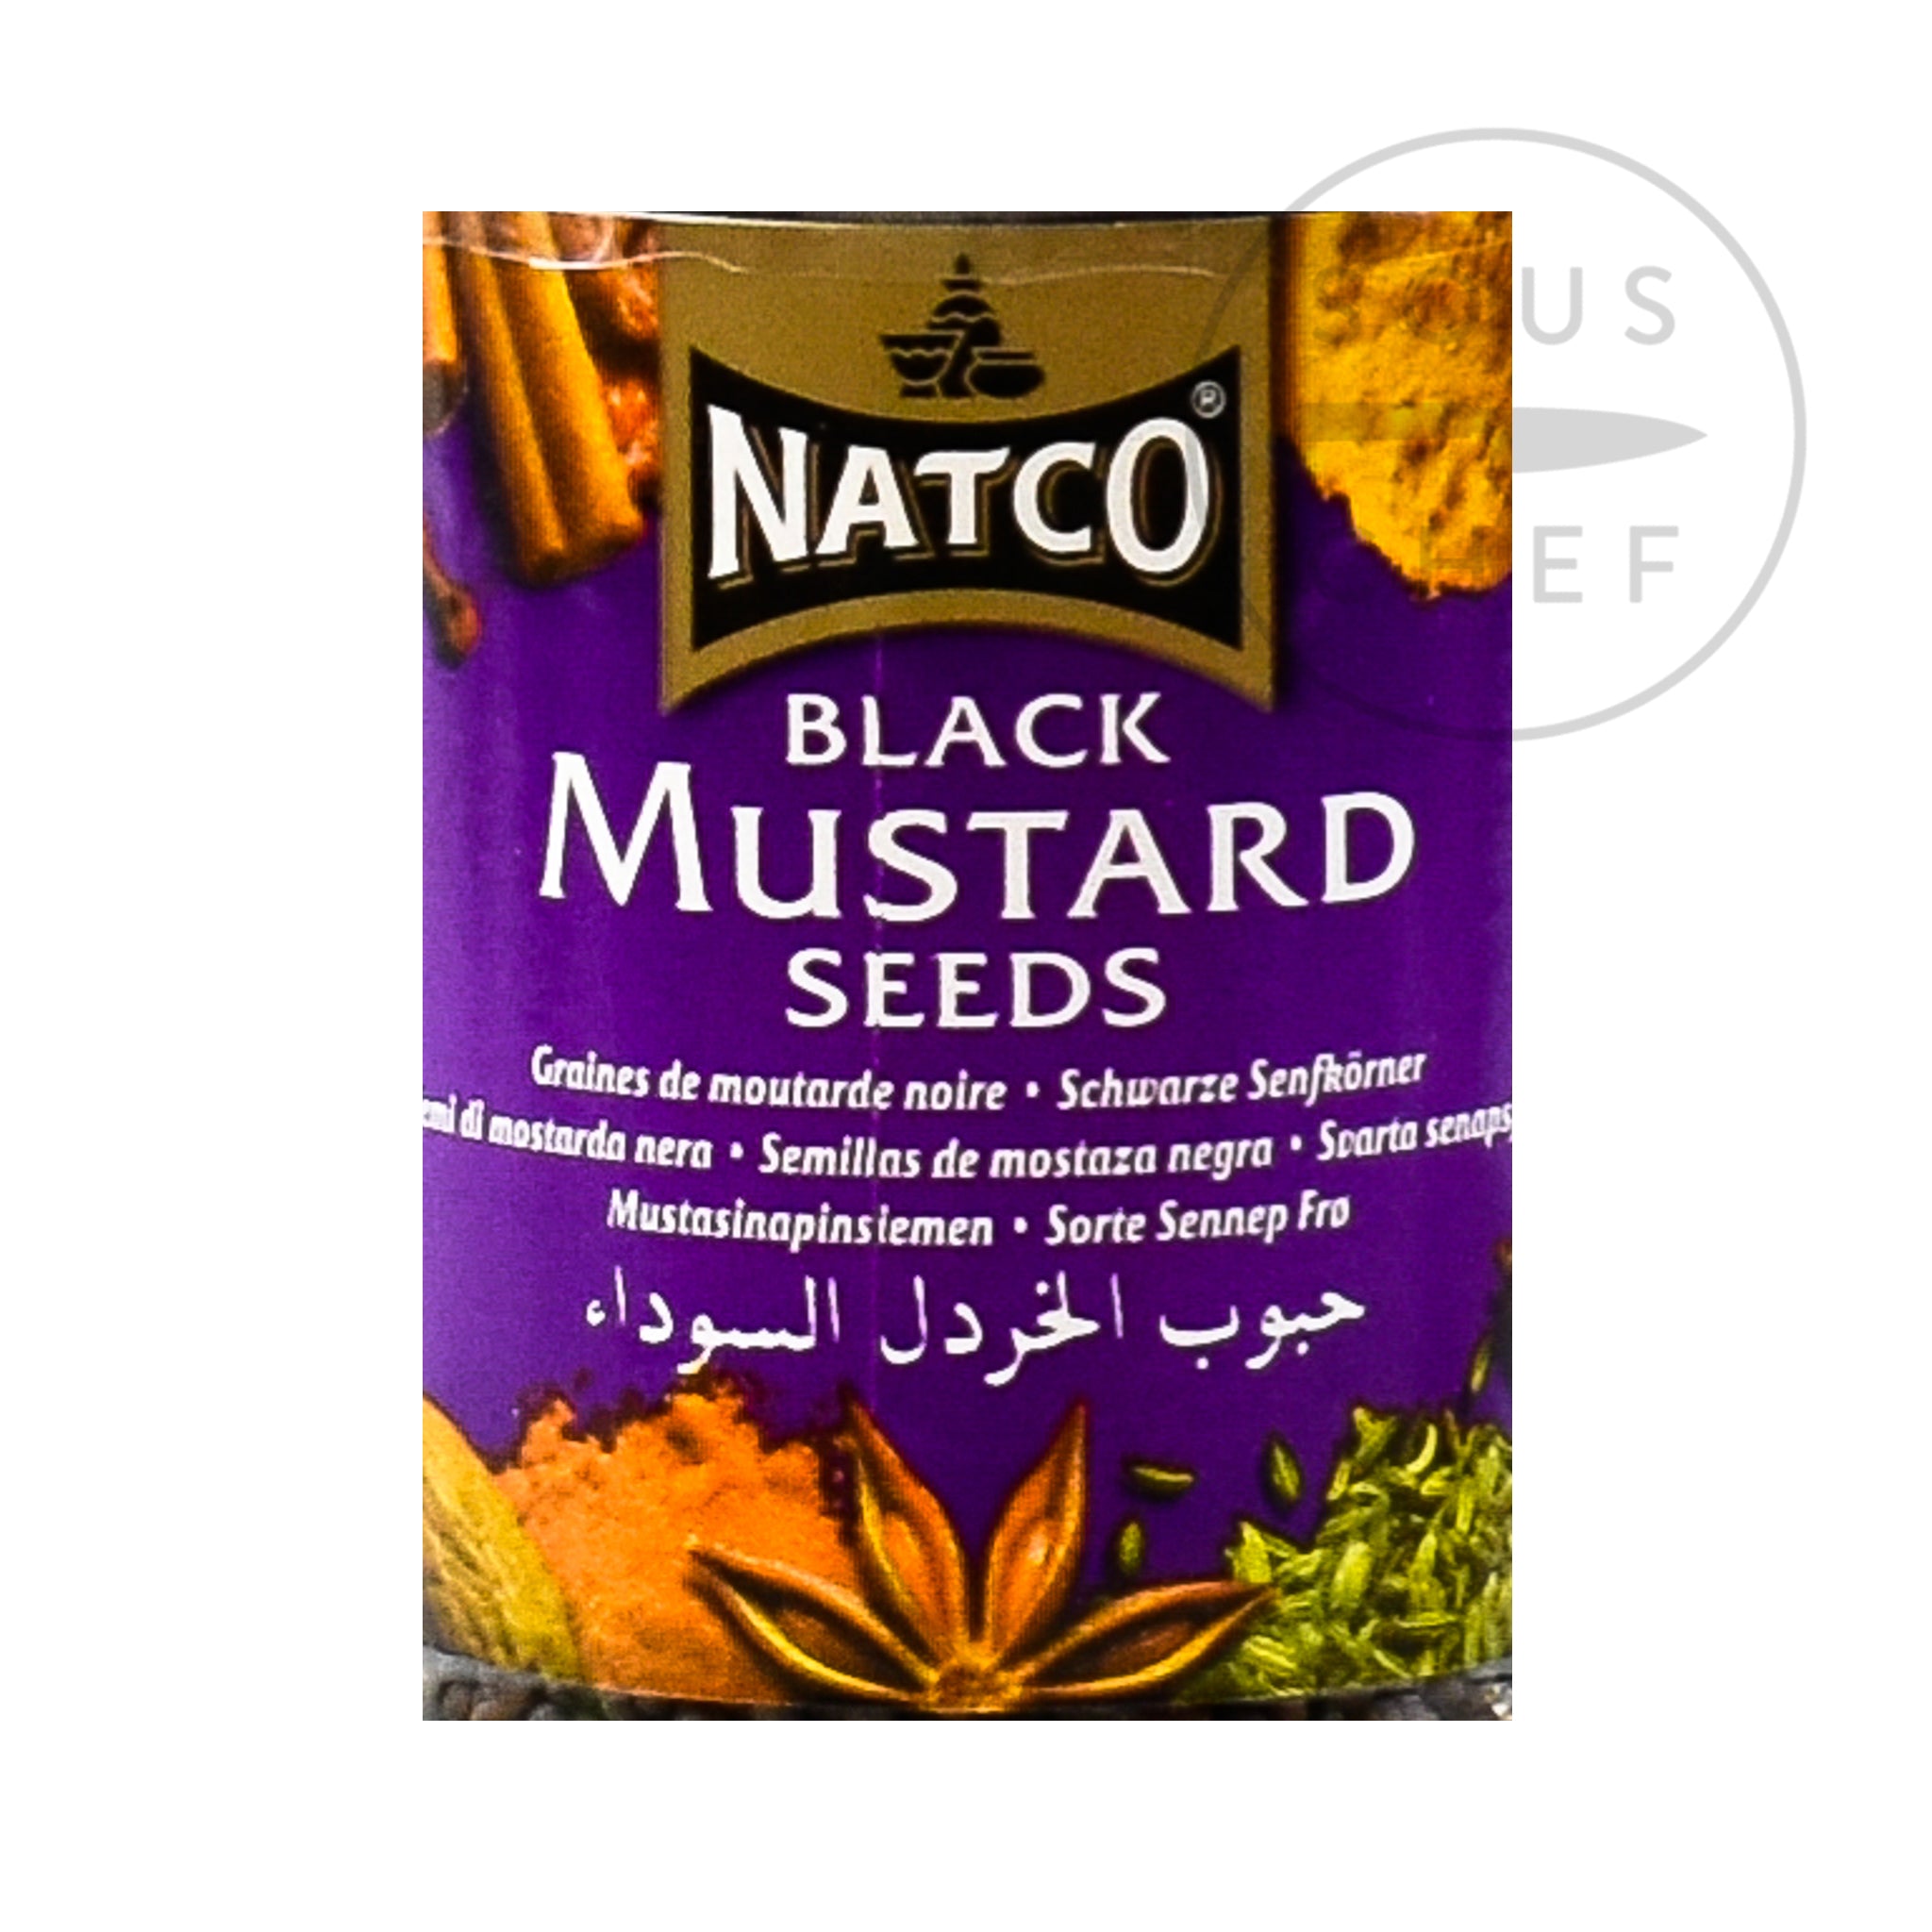 Natco Black Mustard Seeds, 100g